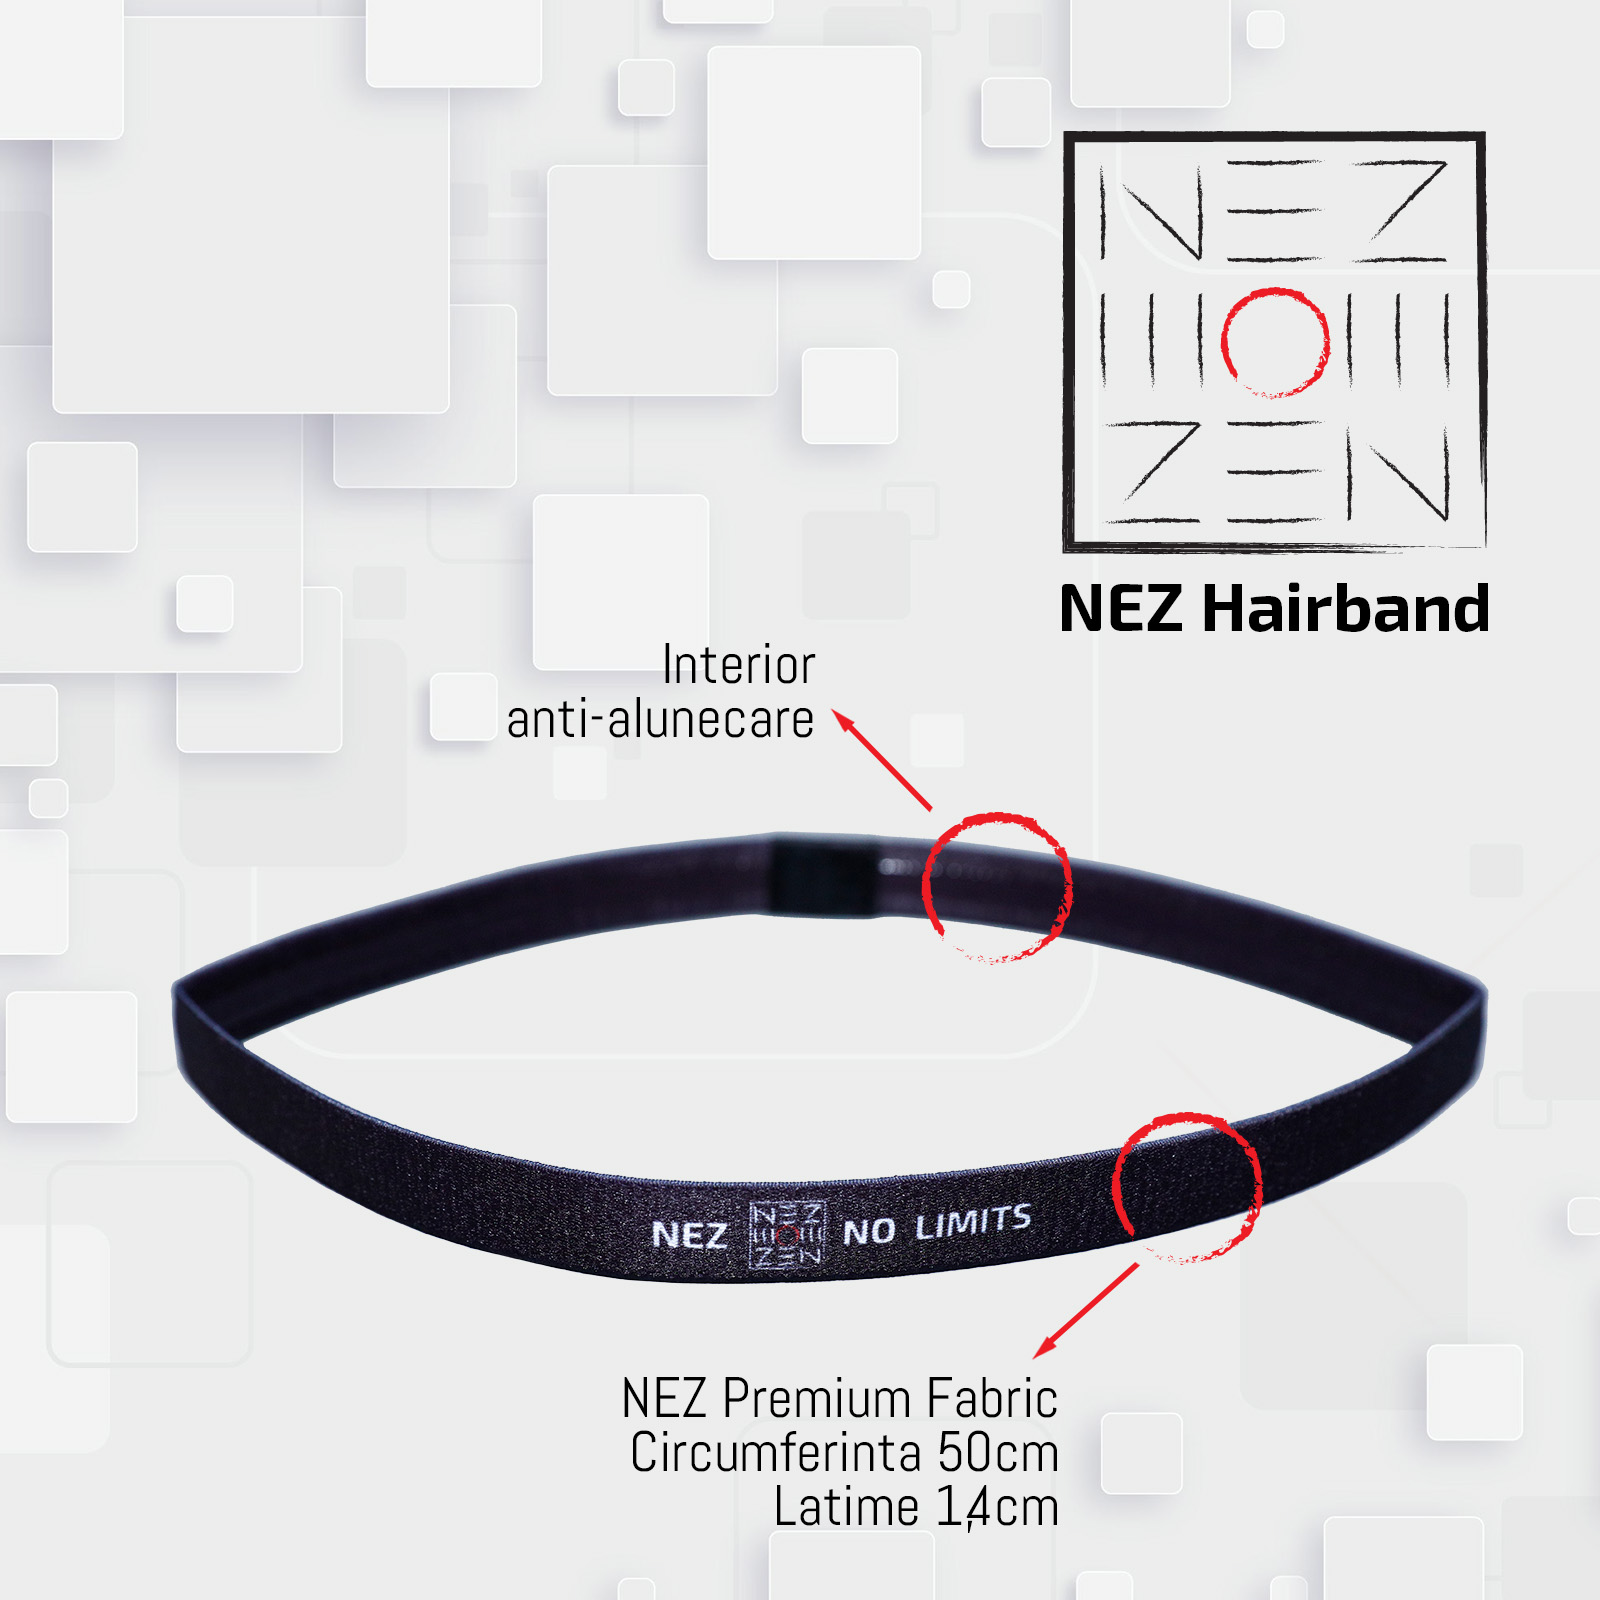 Shop.NEZ.ro – NEZ Hairband – detalii